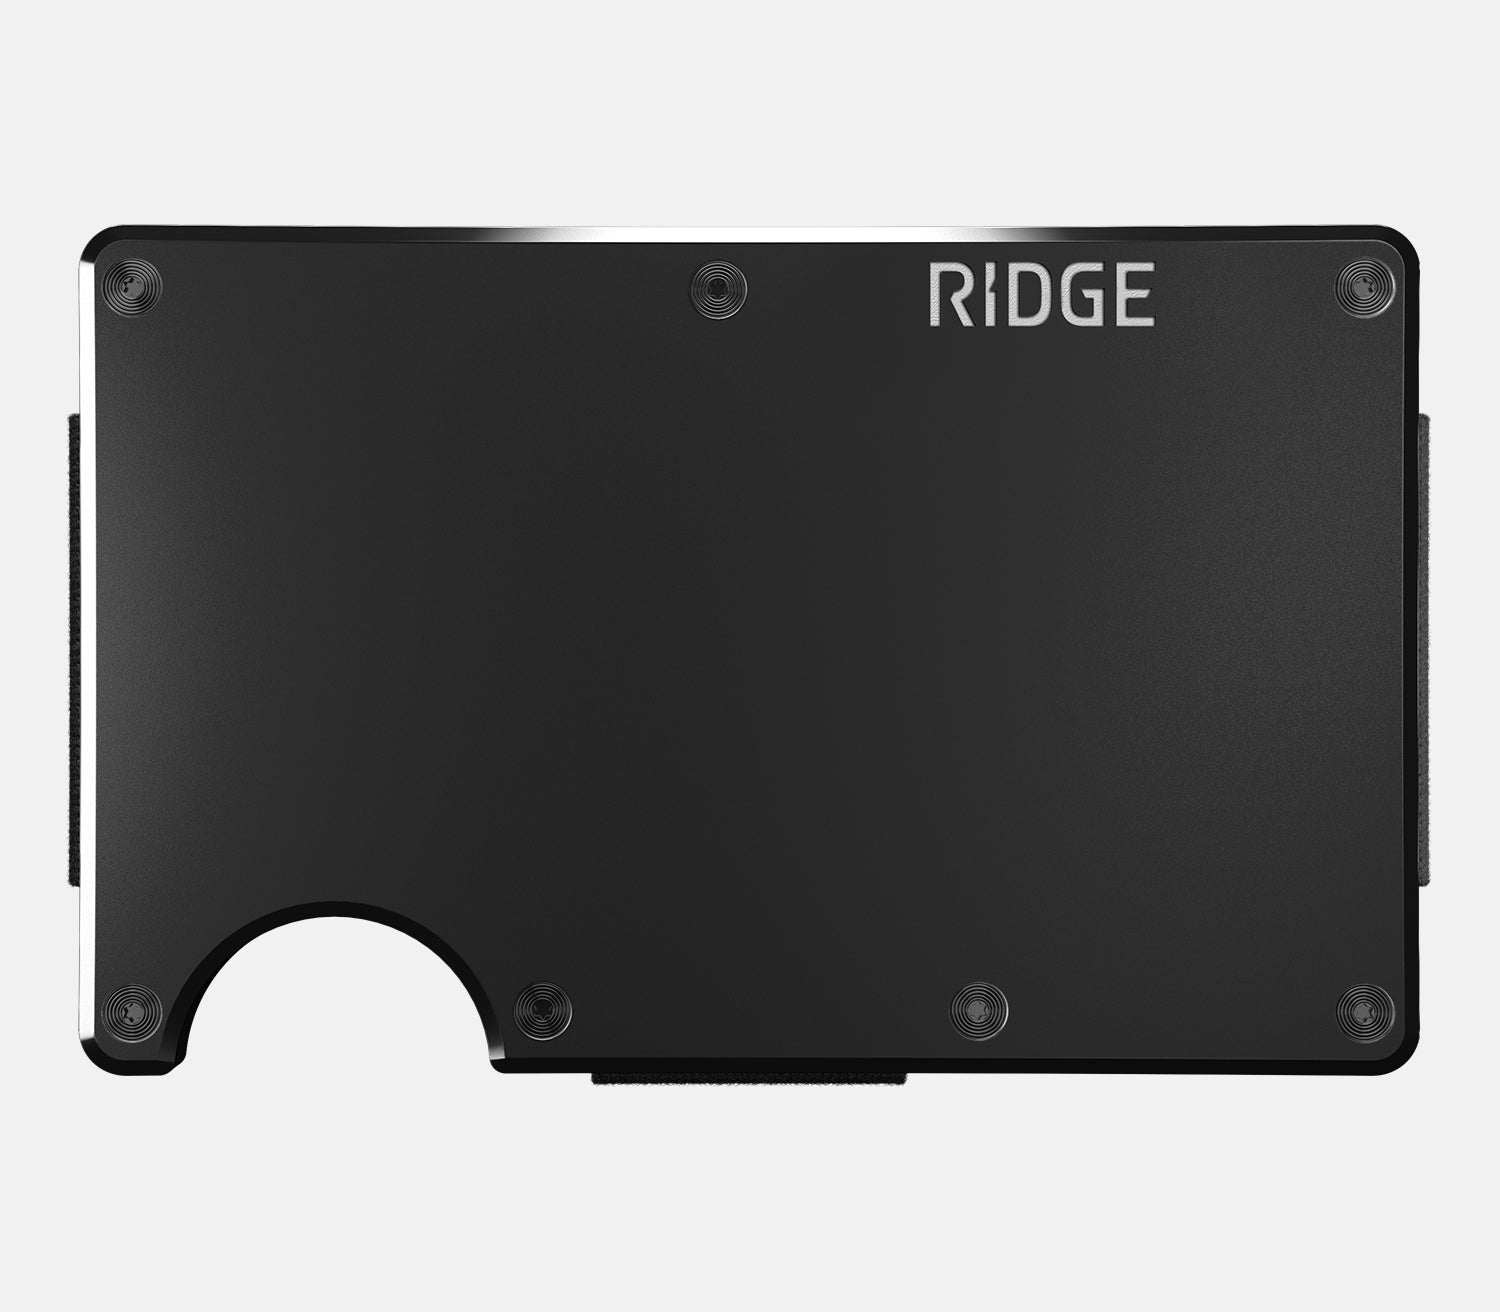 Ridge Wallet Review (Hands-On)